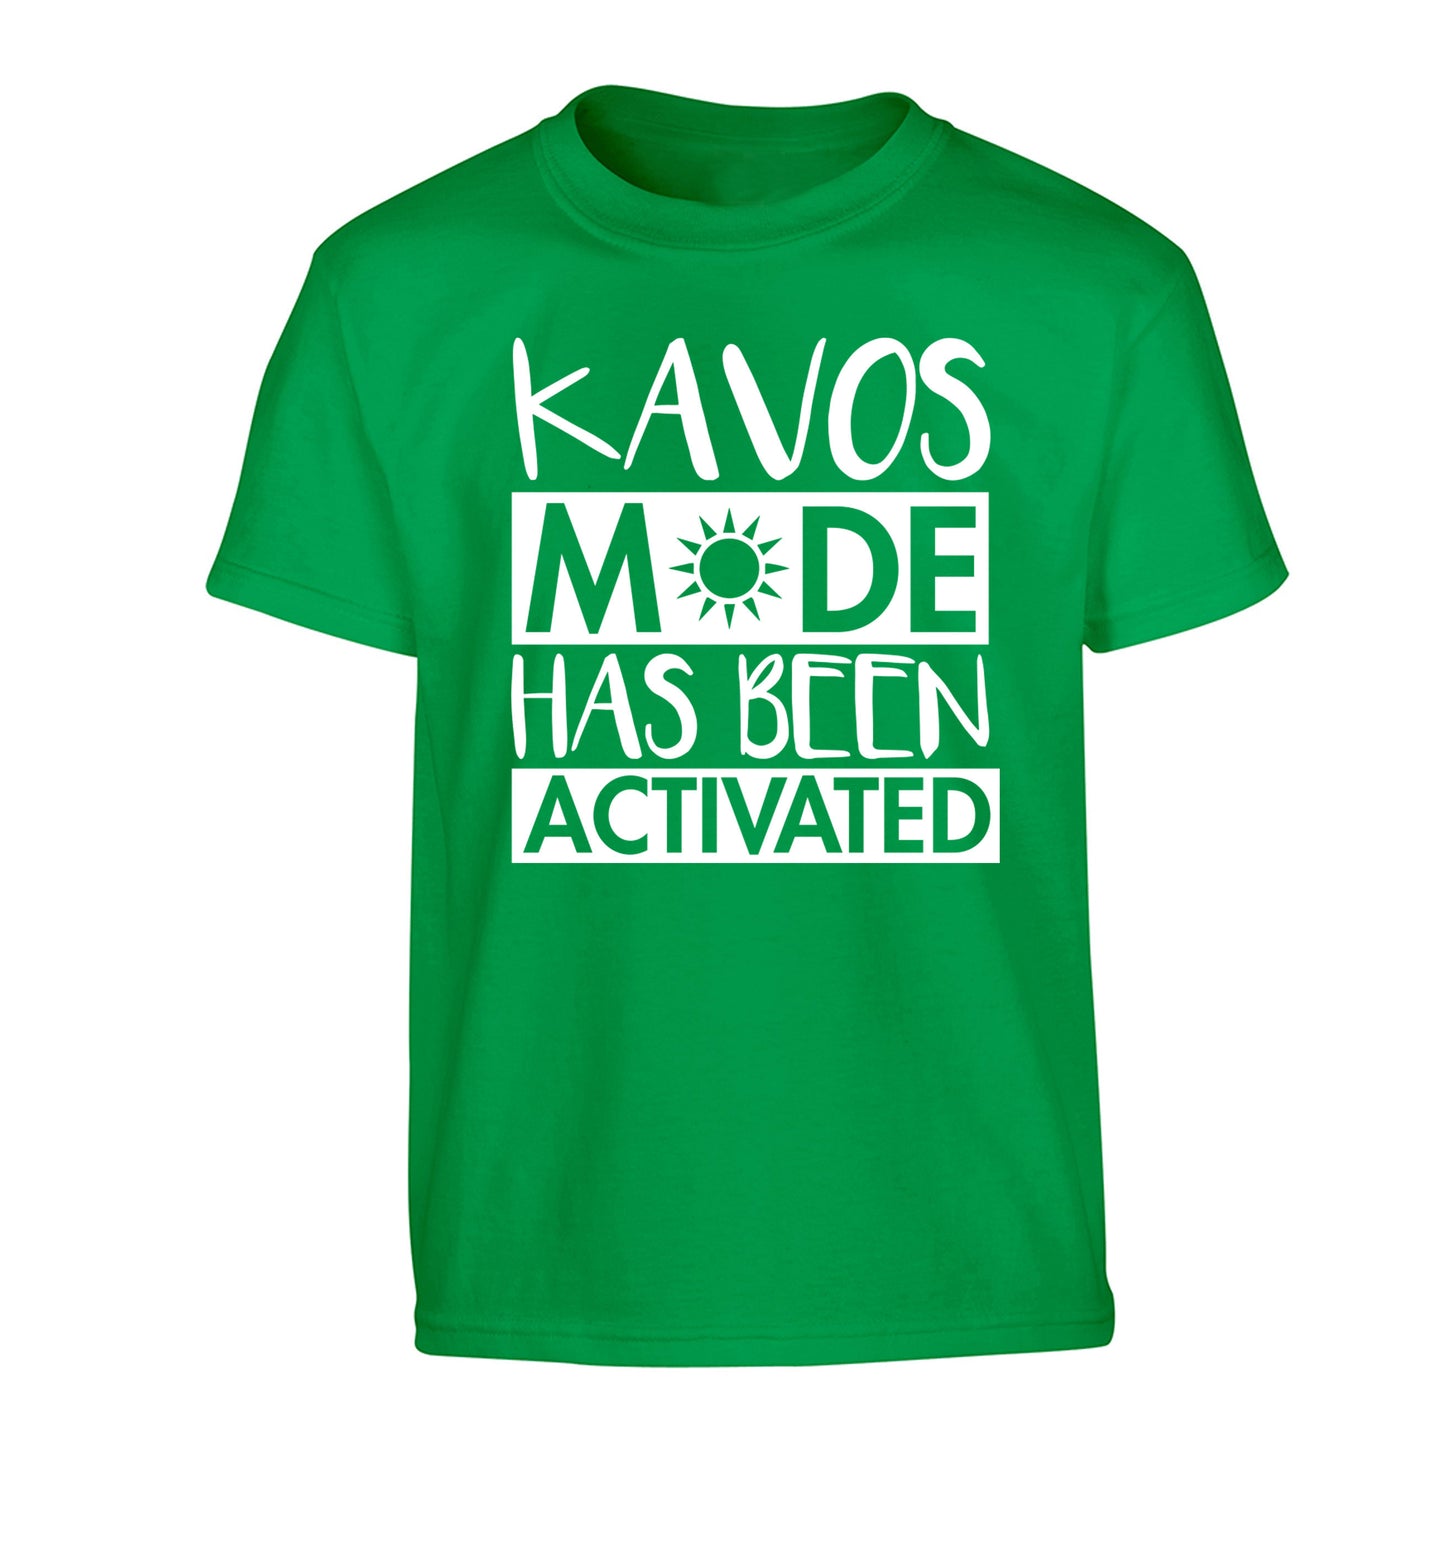 Kavos mode has been activated Children's green Tshirt 12-14 Years